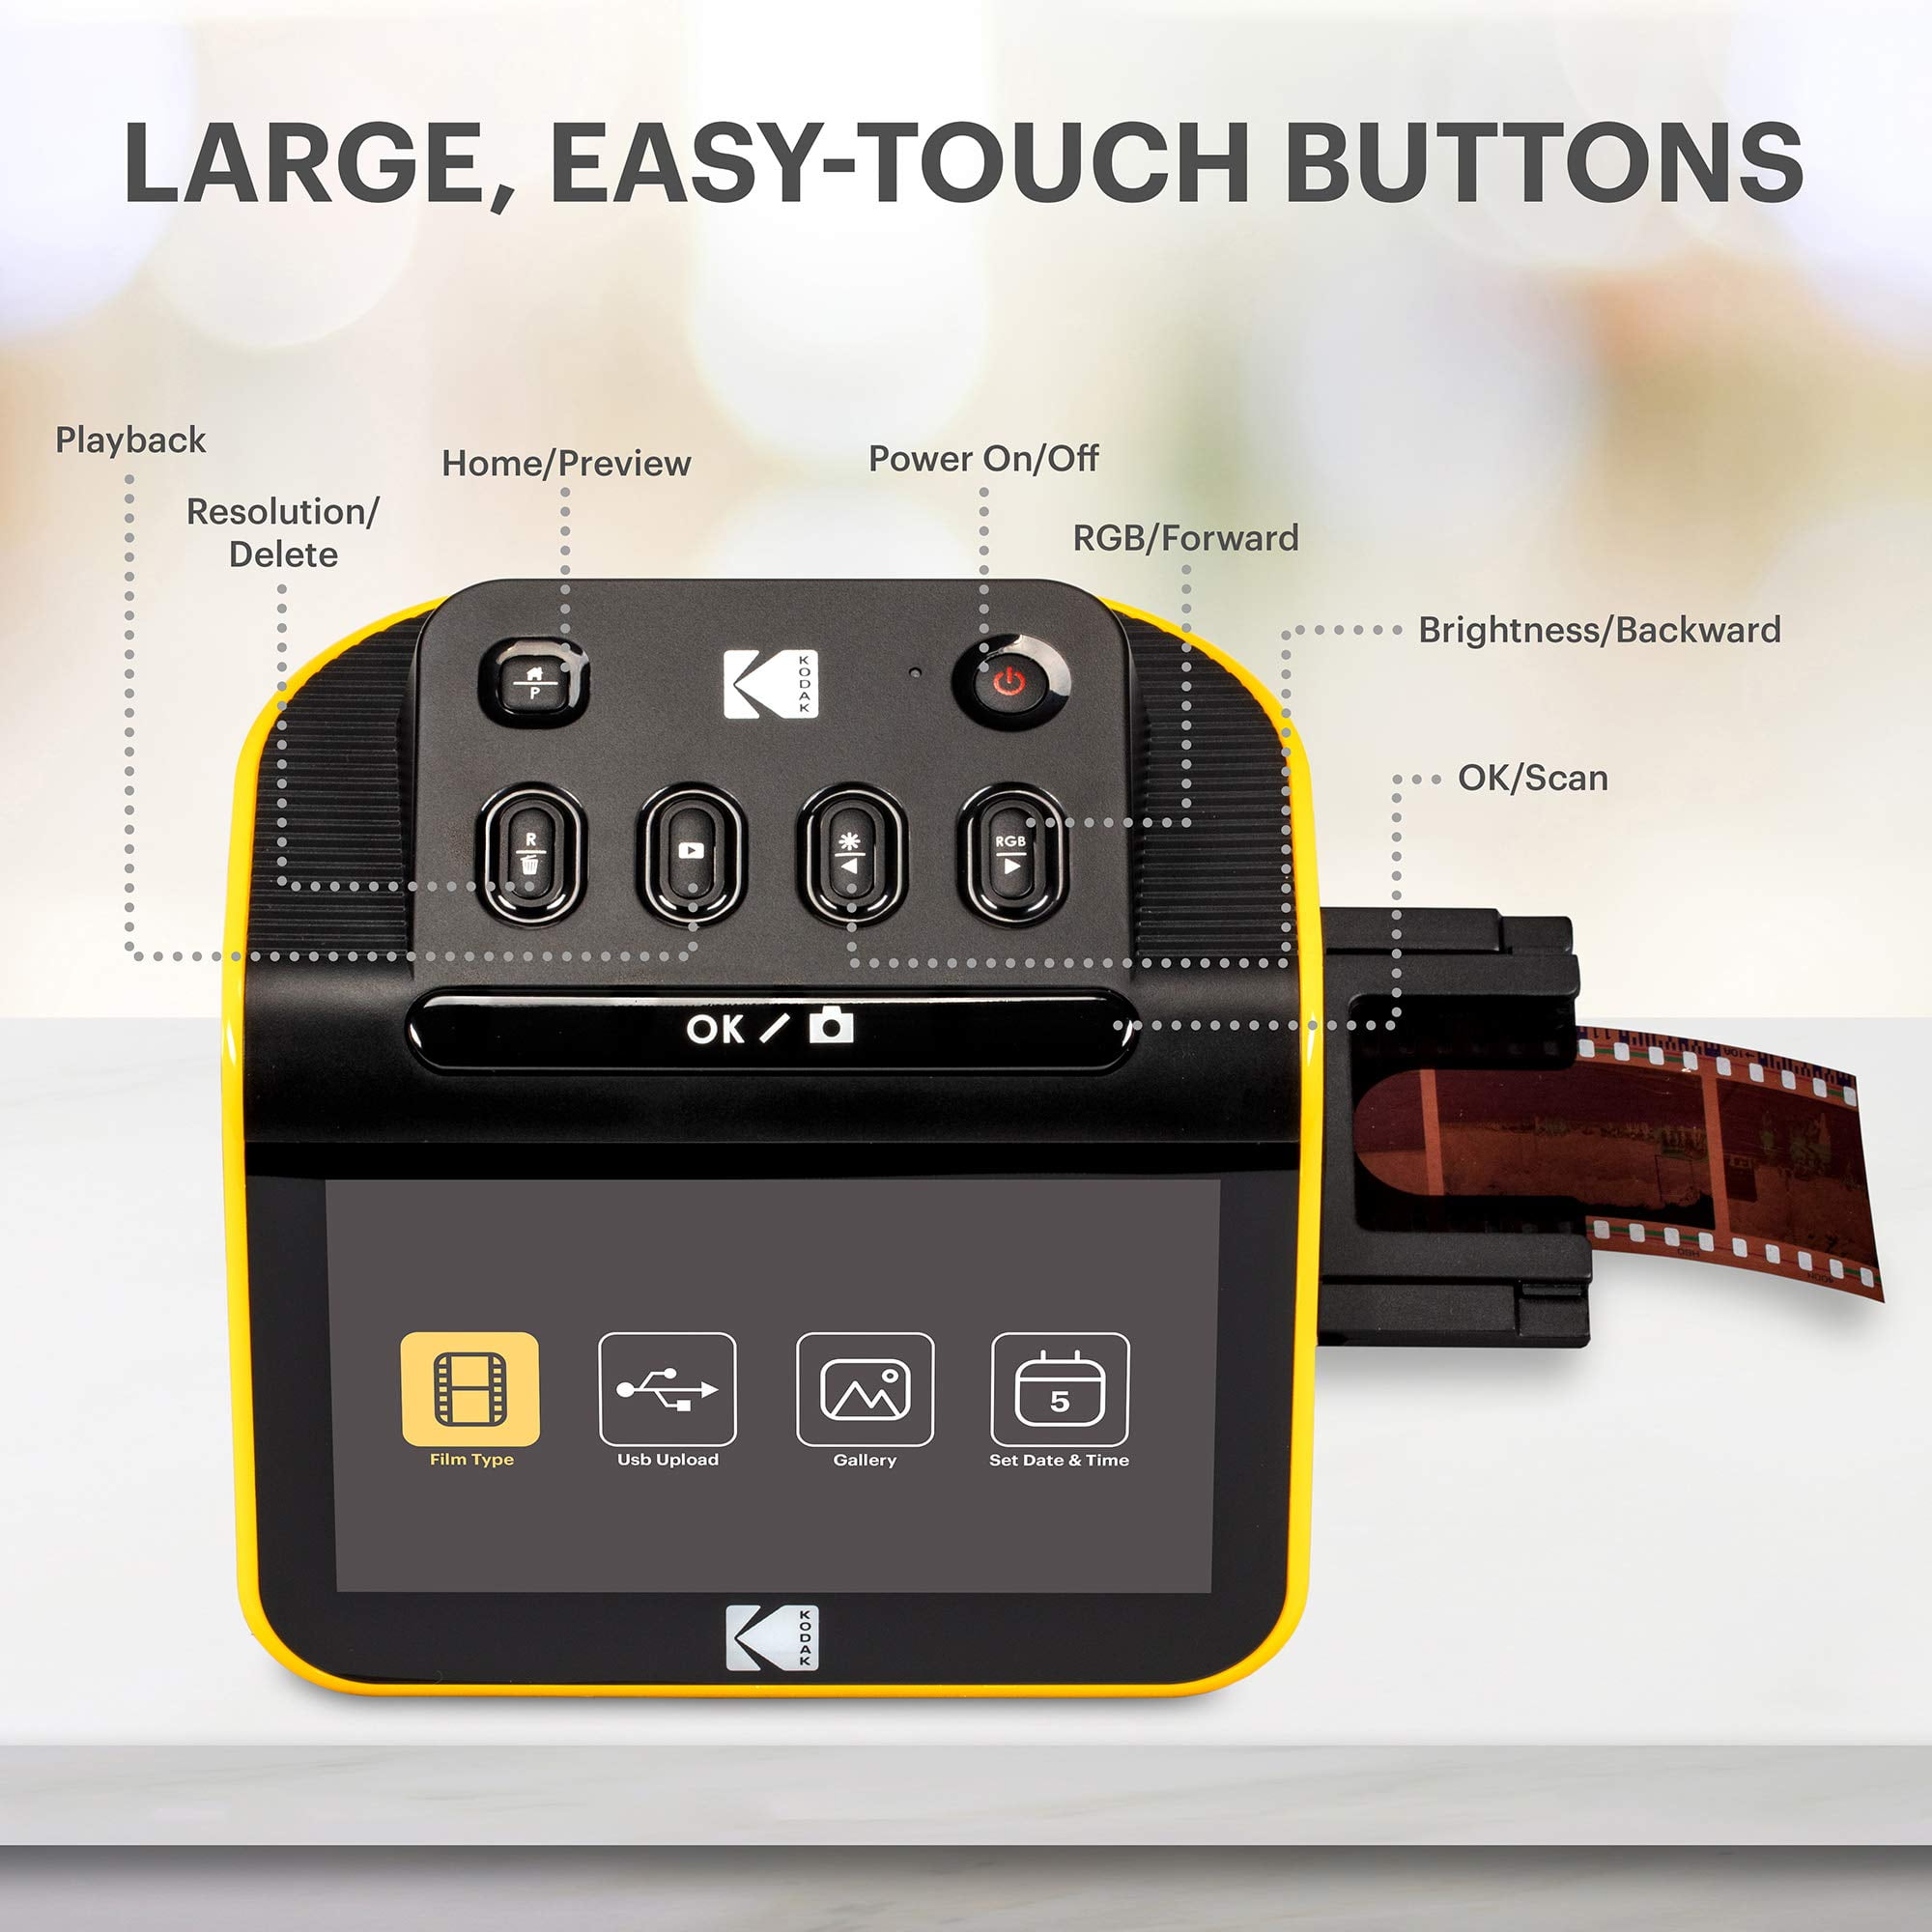 Kodak slide n scan digital film scanner - photo/video - by owner -  electronics sale - craigslist